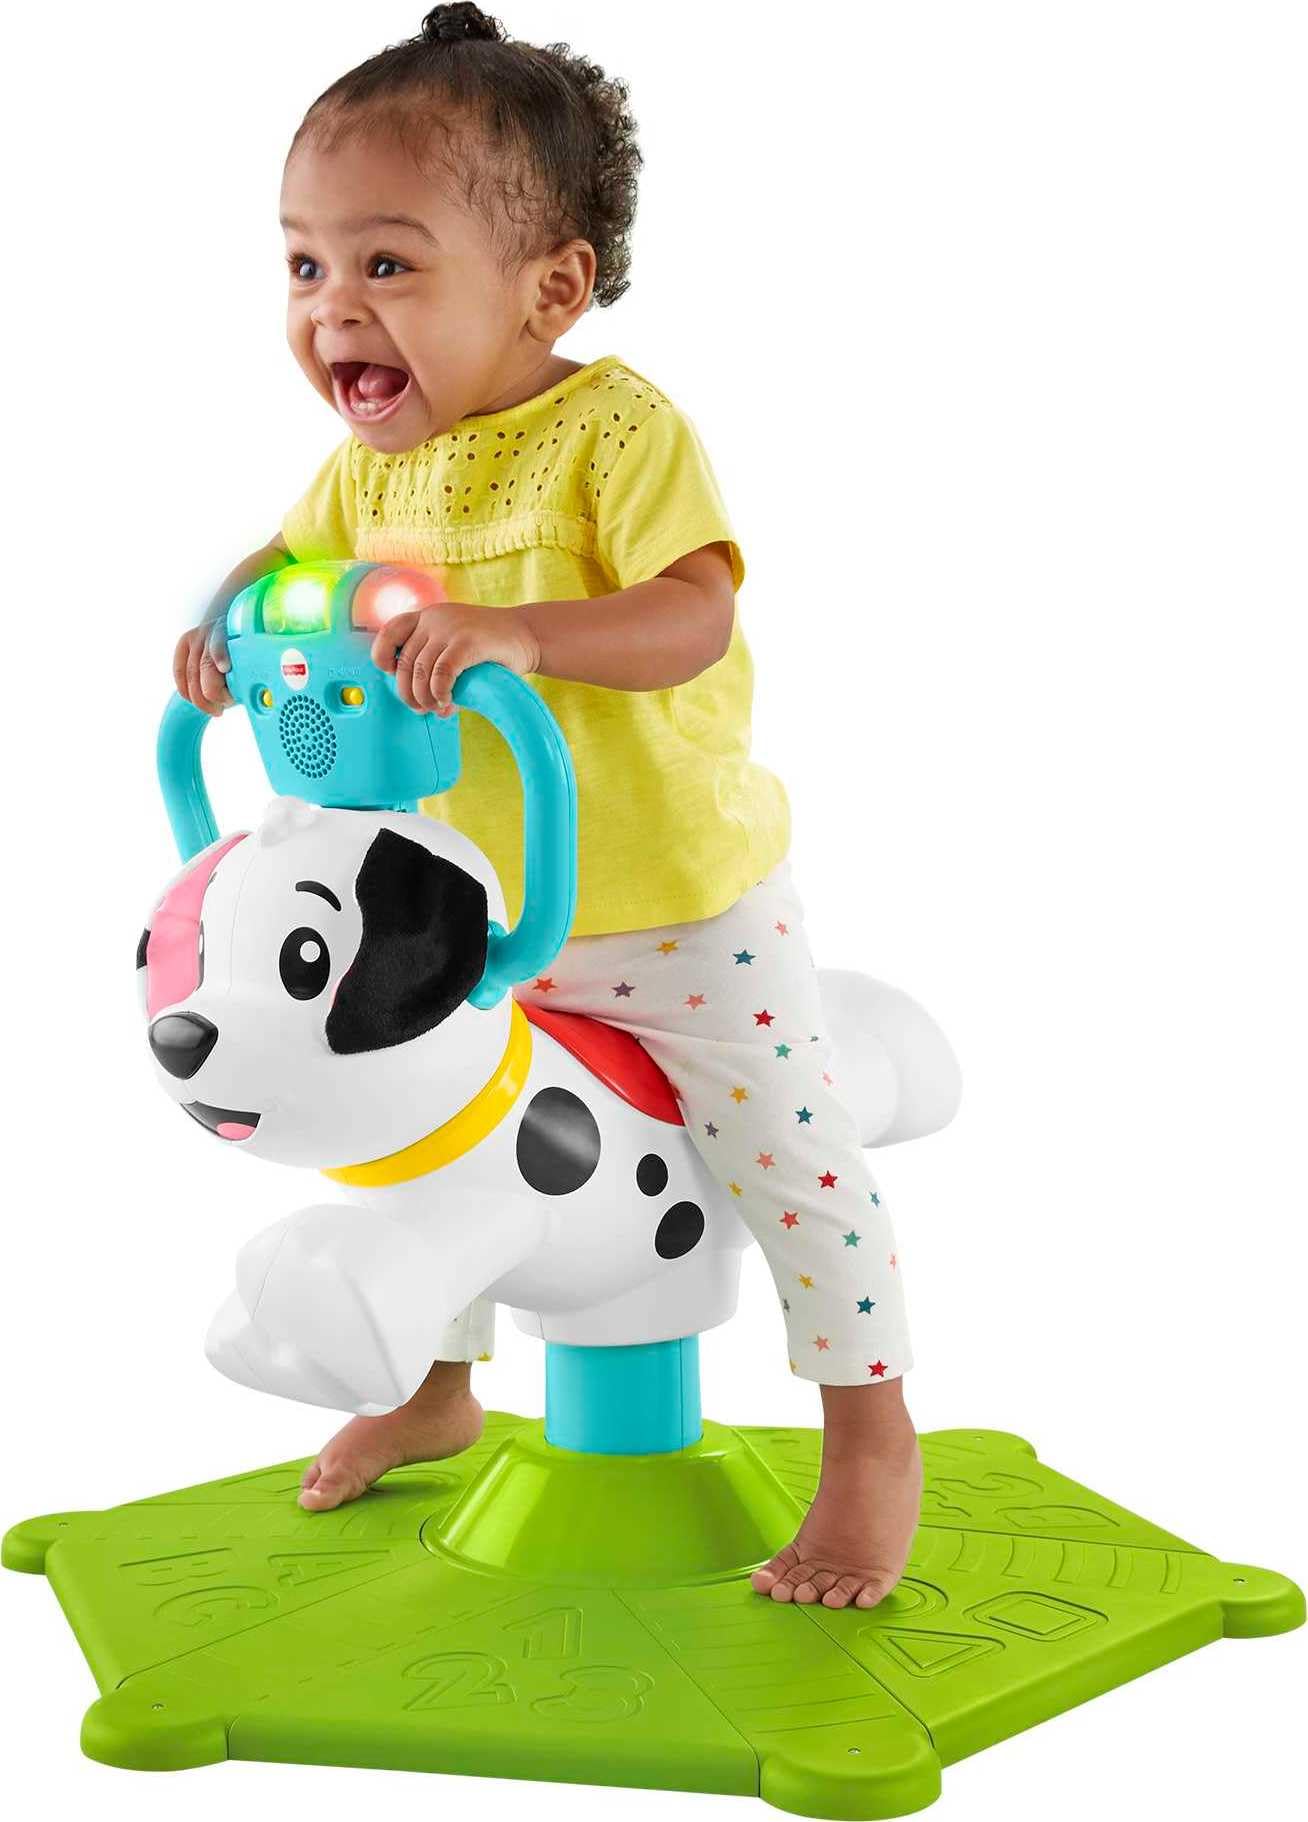 Fisher-Price 幼儿骑乘式学习玩具、弹跳和旋转小狗固定音乐摇椅，适合 12 个月以上婴儿和幼儿